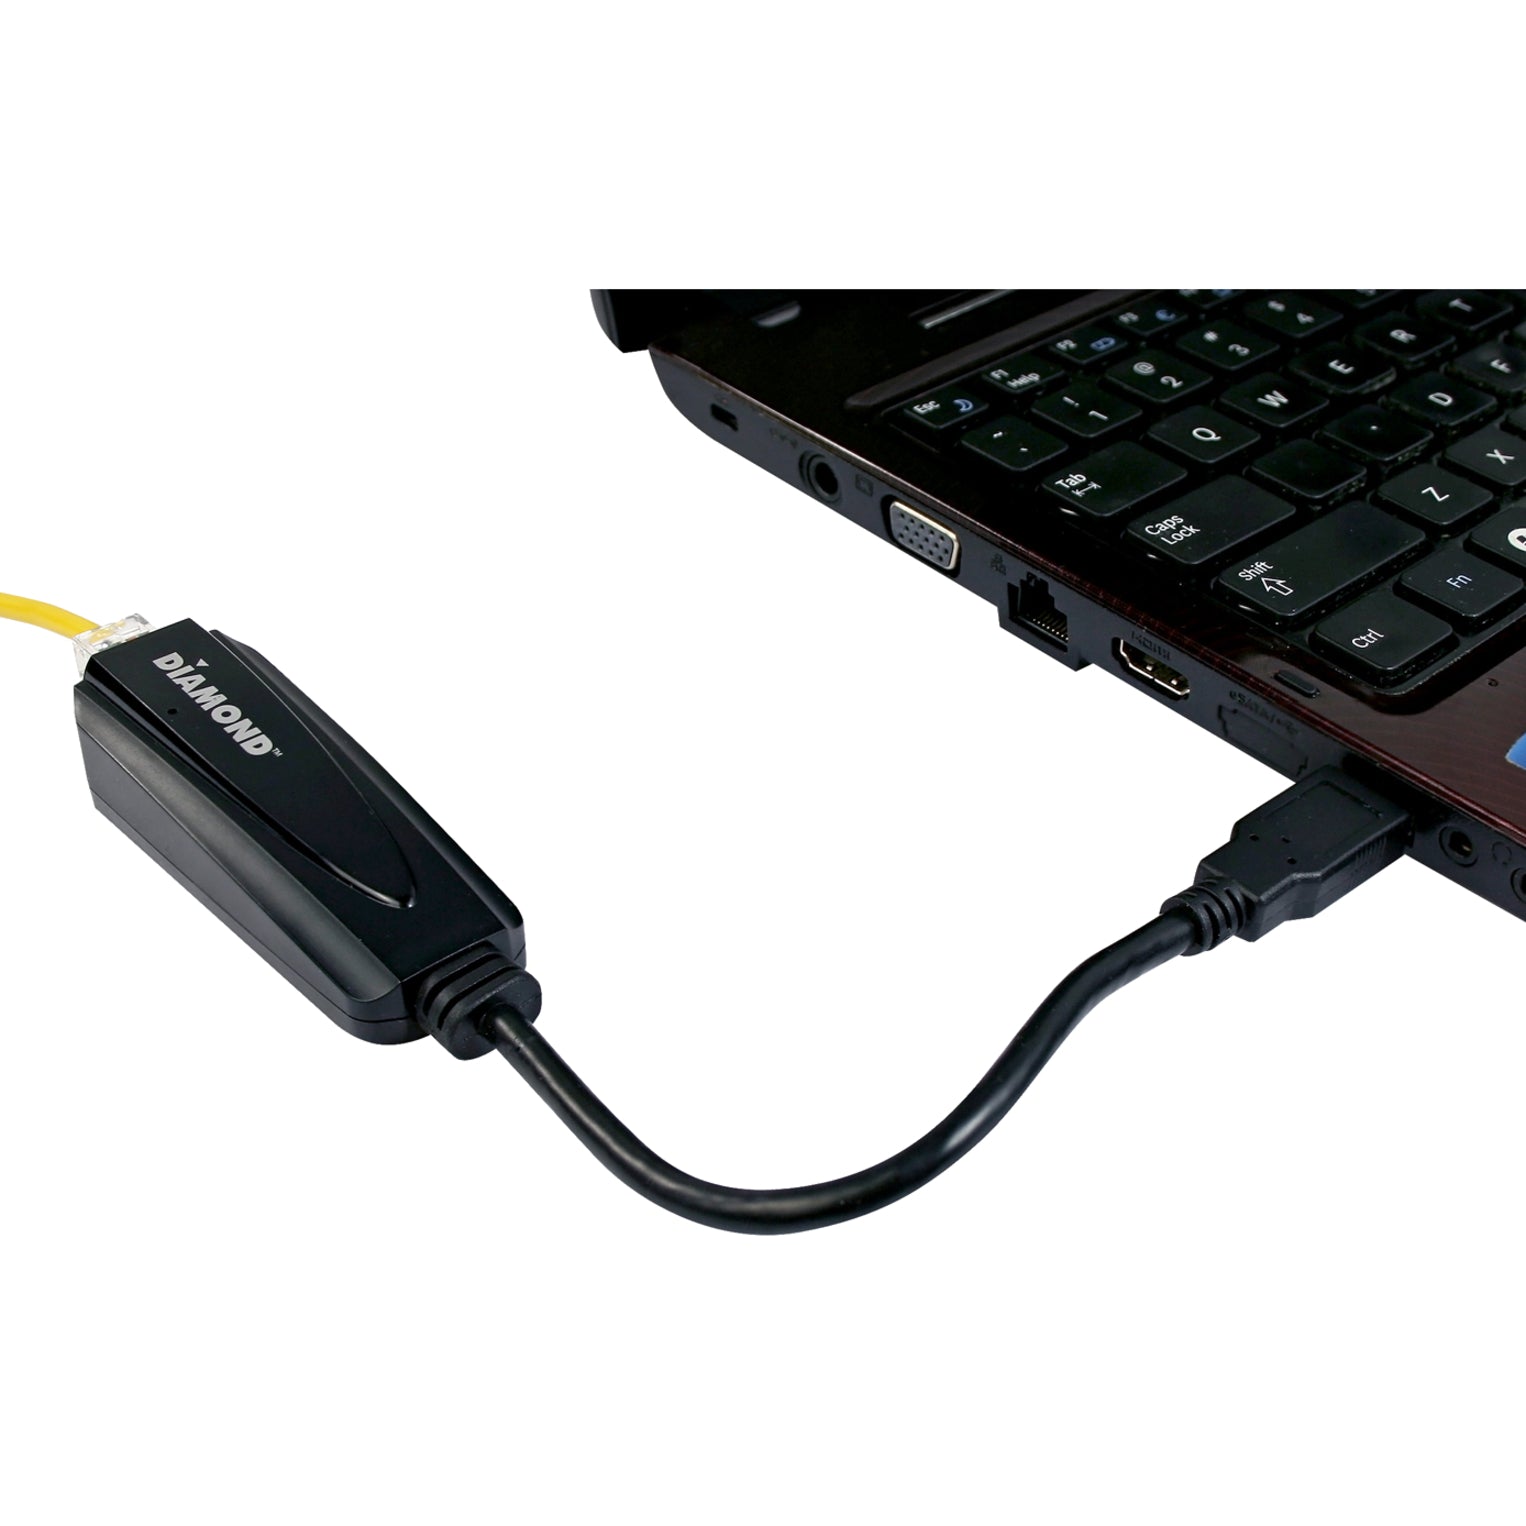 DIAMOND UE3000 USB3.0 Gigabit Ethernet Adapter, USB to RJ45, for Windows 10, 8.1, 8, 7, Mac OS, Linux OS and Chrome OS [Discontinued]